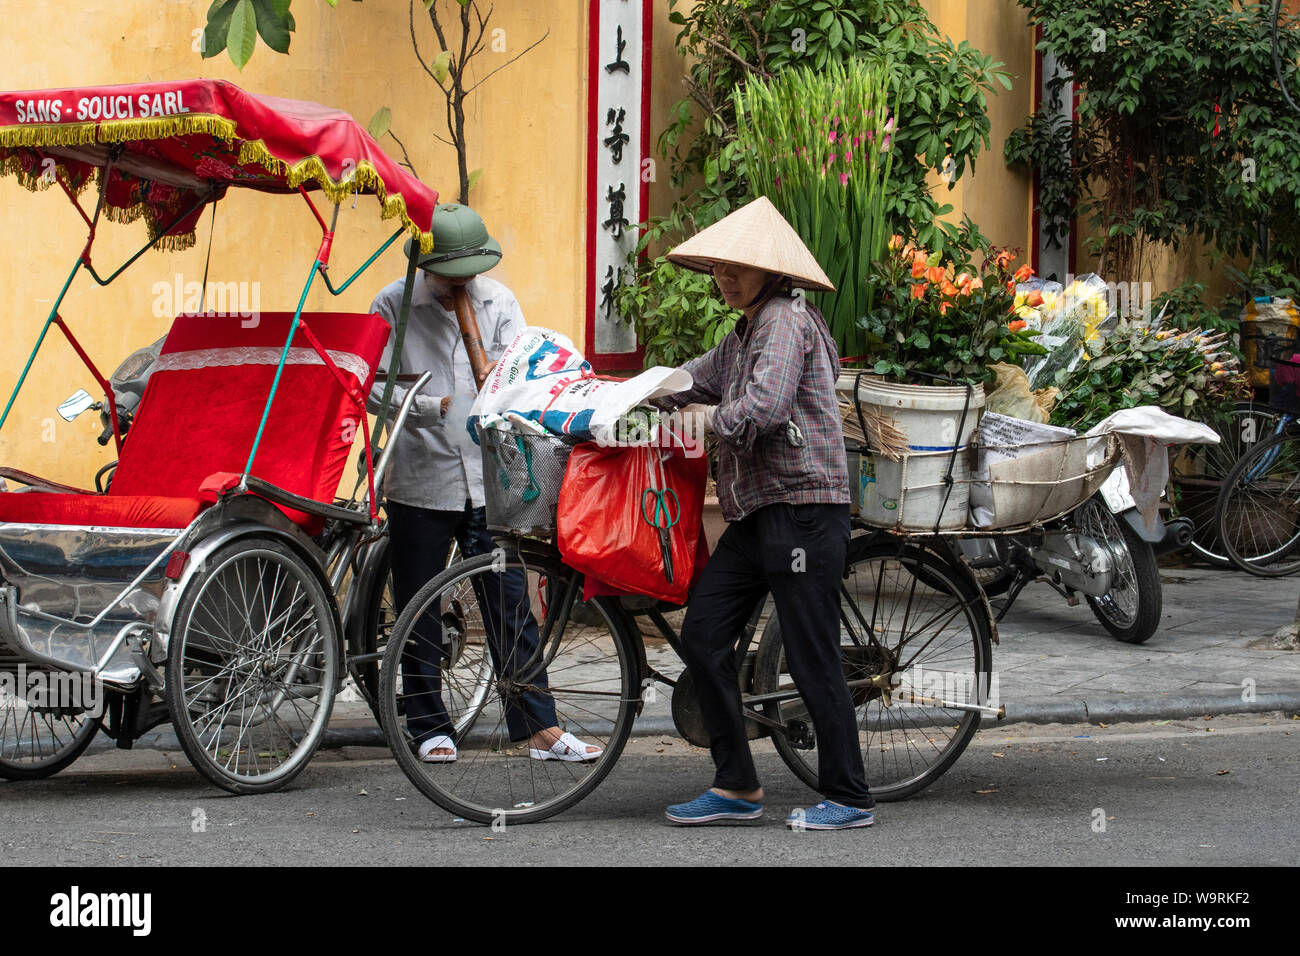 Asia, Asien, SE Asia, Vietnam, Northern, Hanoi Street *** Local Caption *** Stock Photo